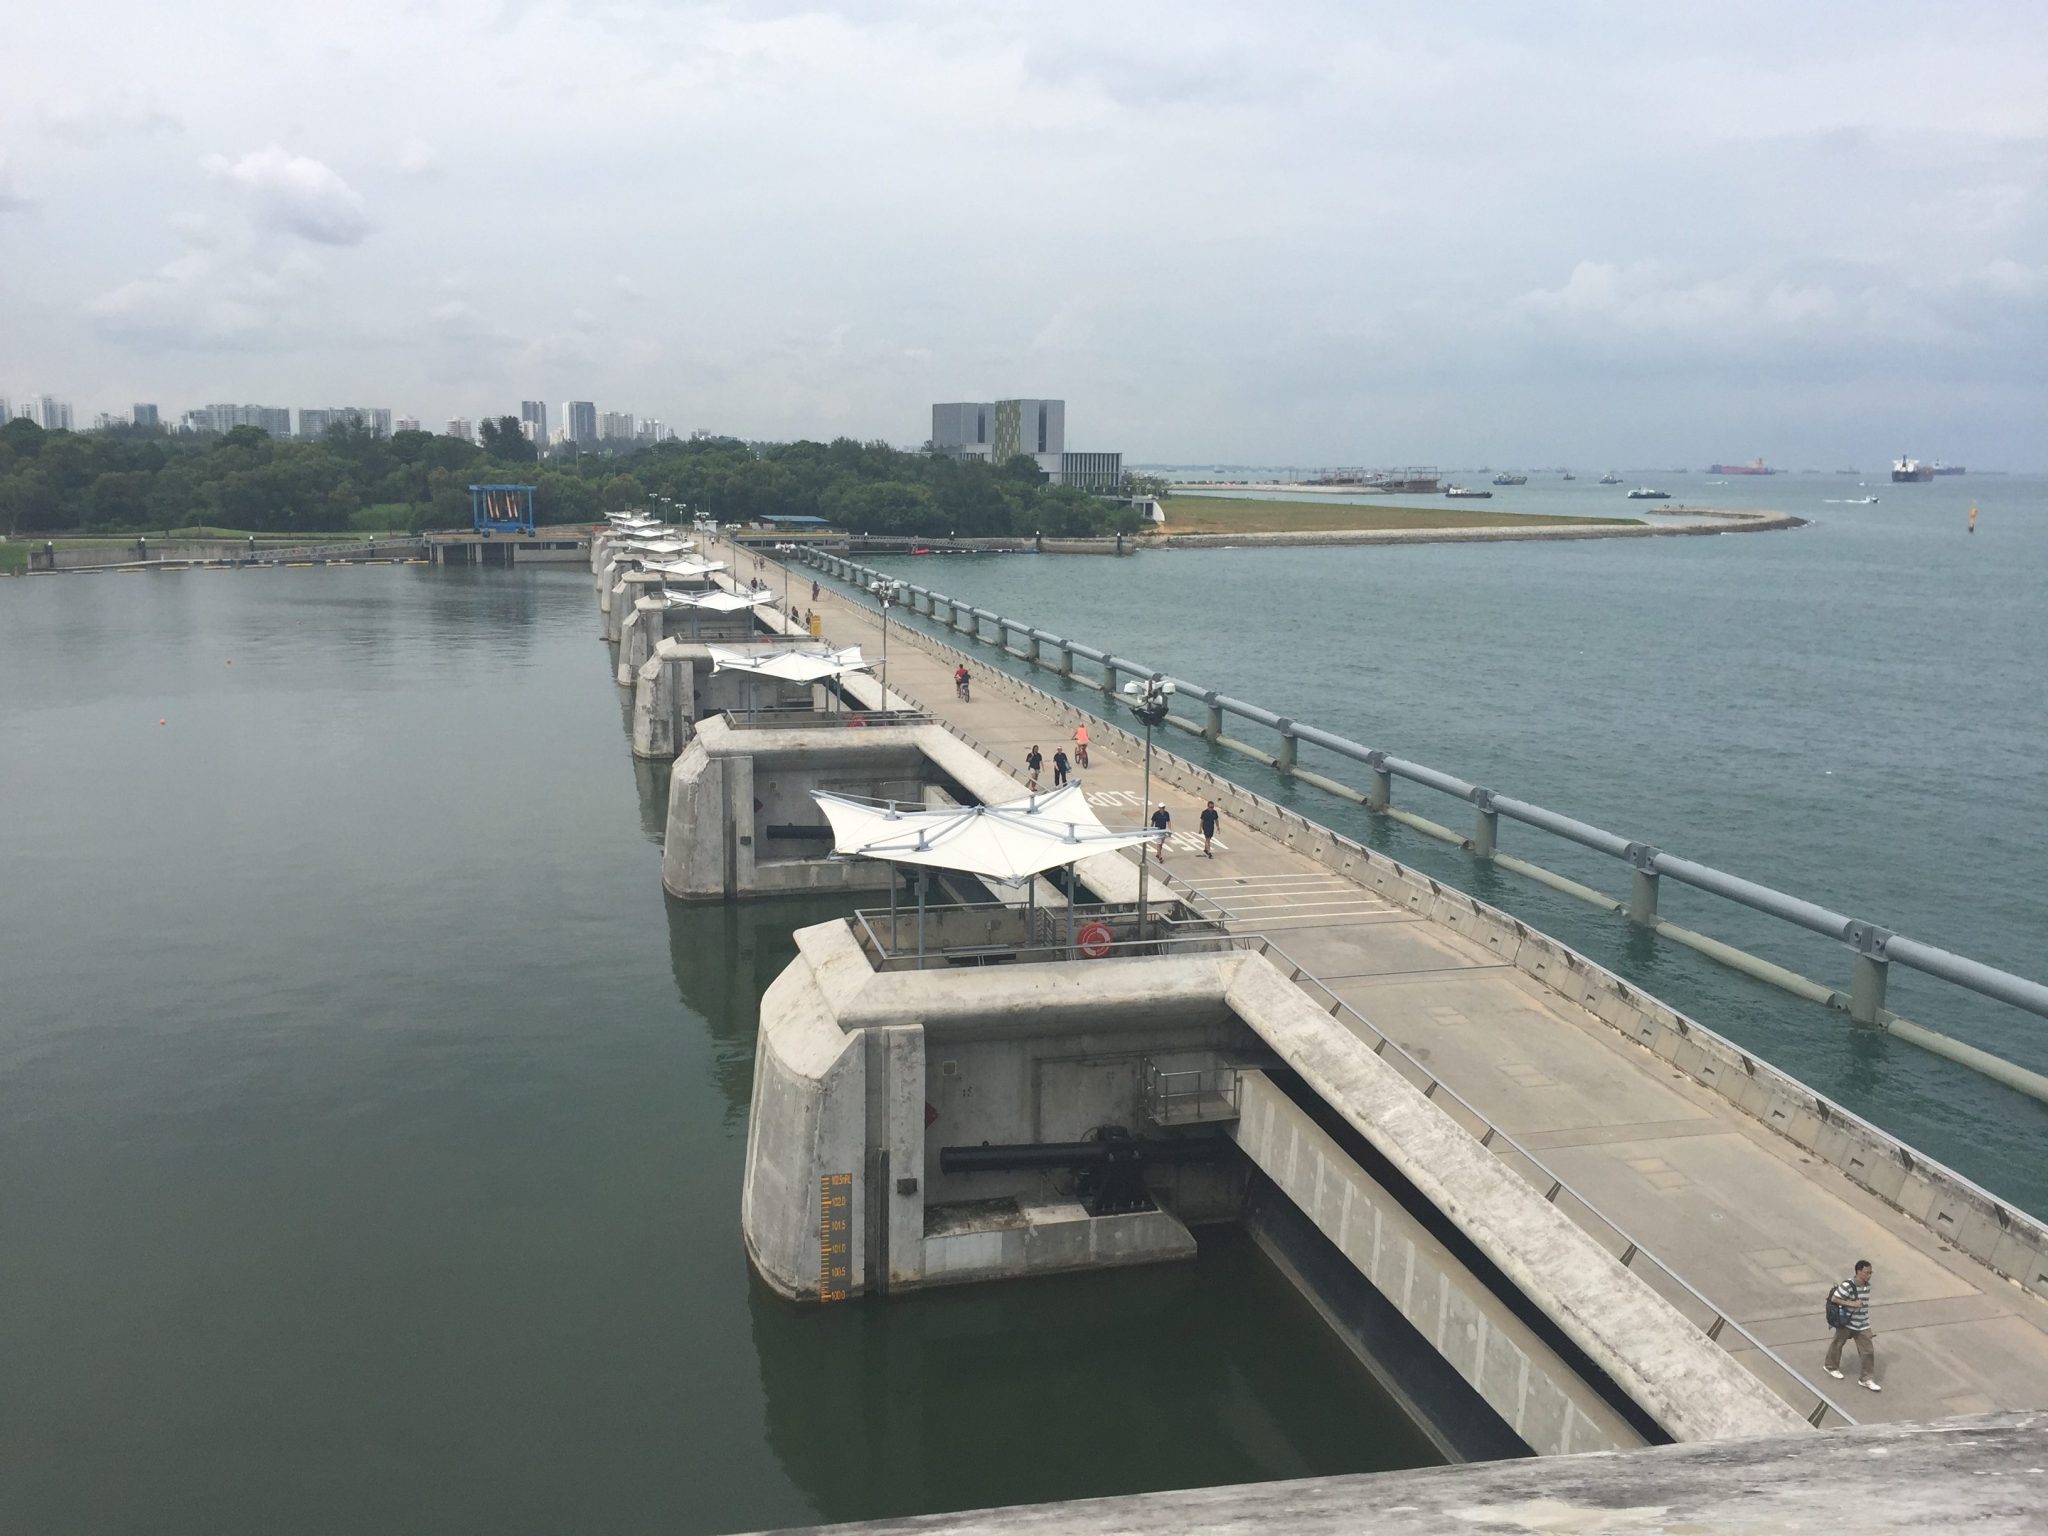 Marina Barrage and reservoir